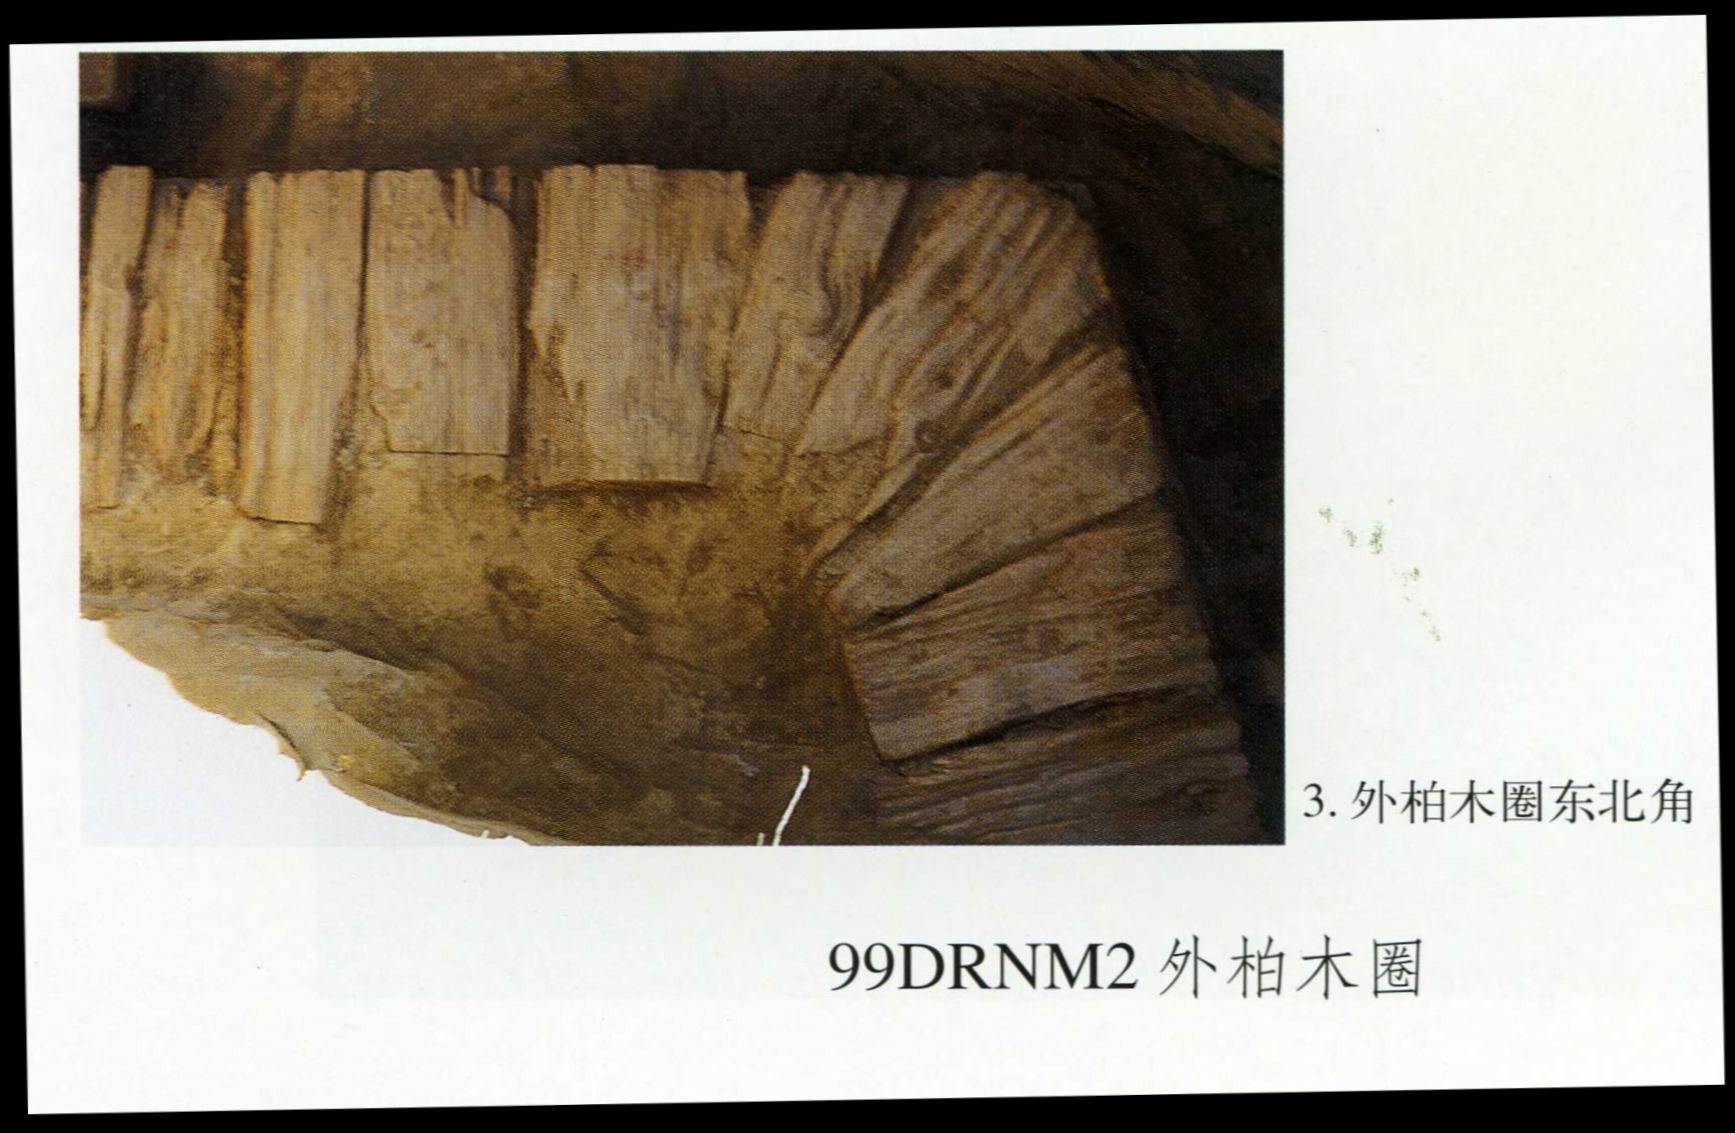 99DRNM2出土的柏木板垫石圈